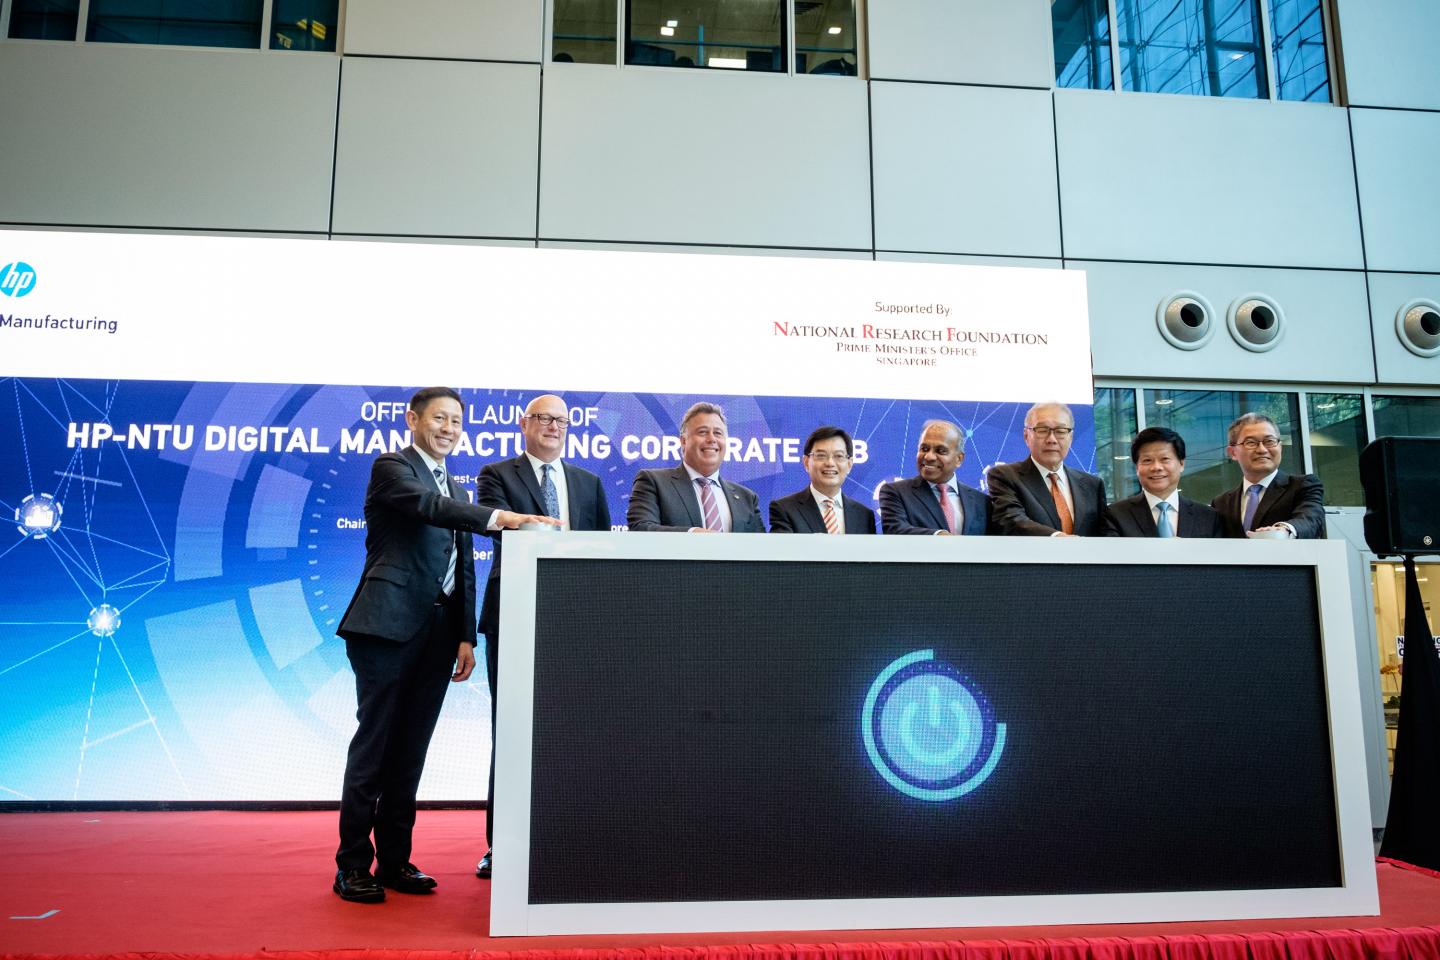 Launch of the HP-NTU Digital Manufacturing Corporate Lab